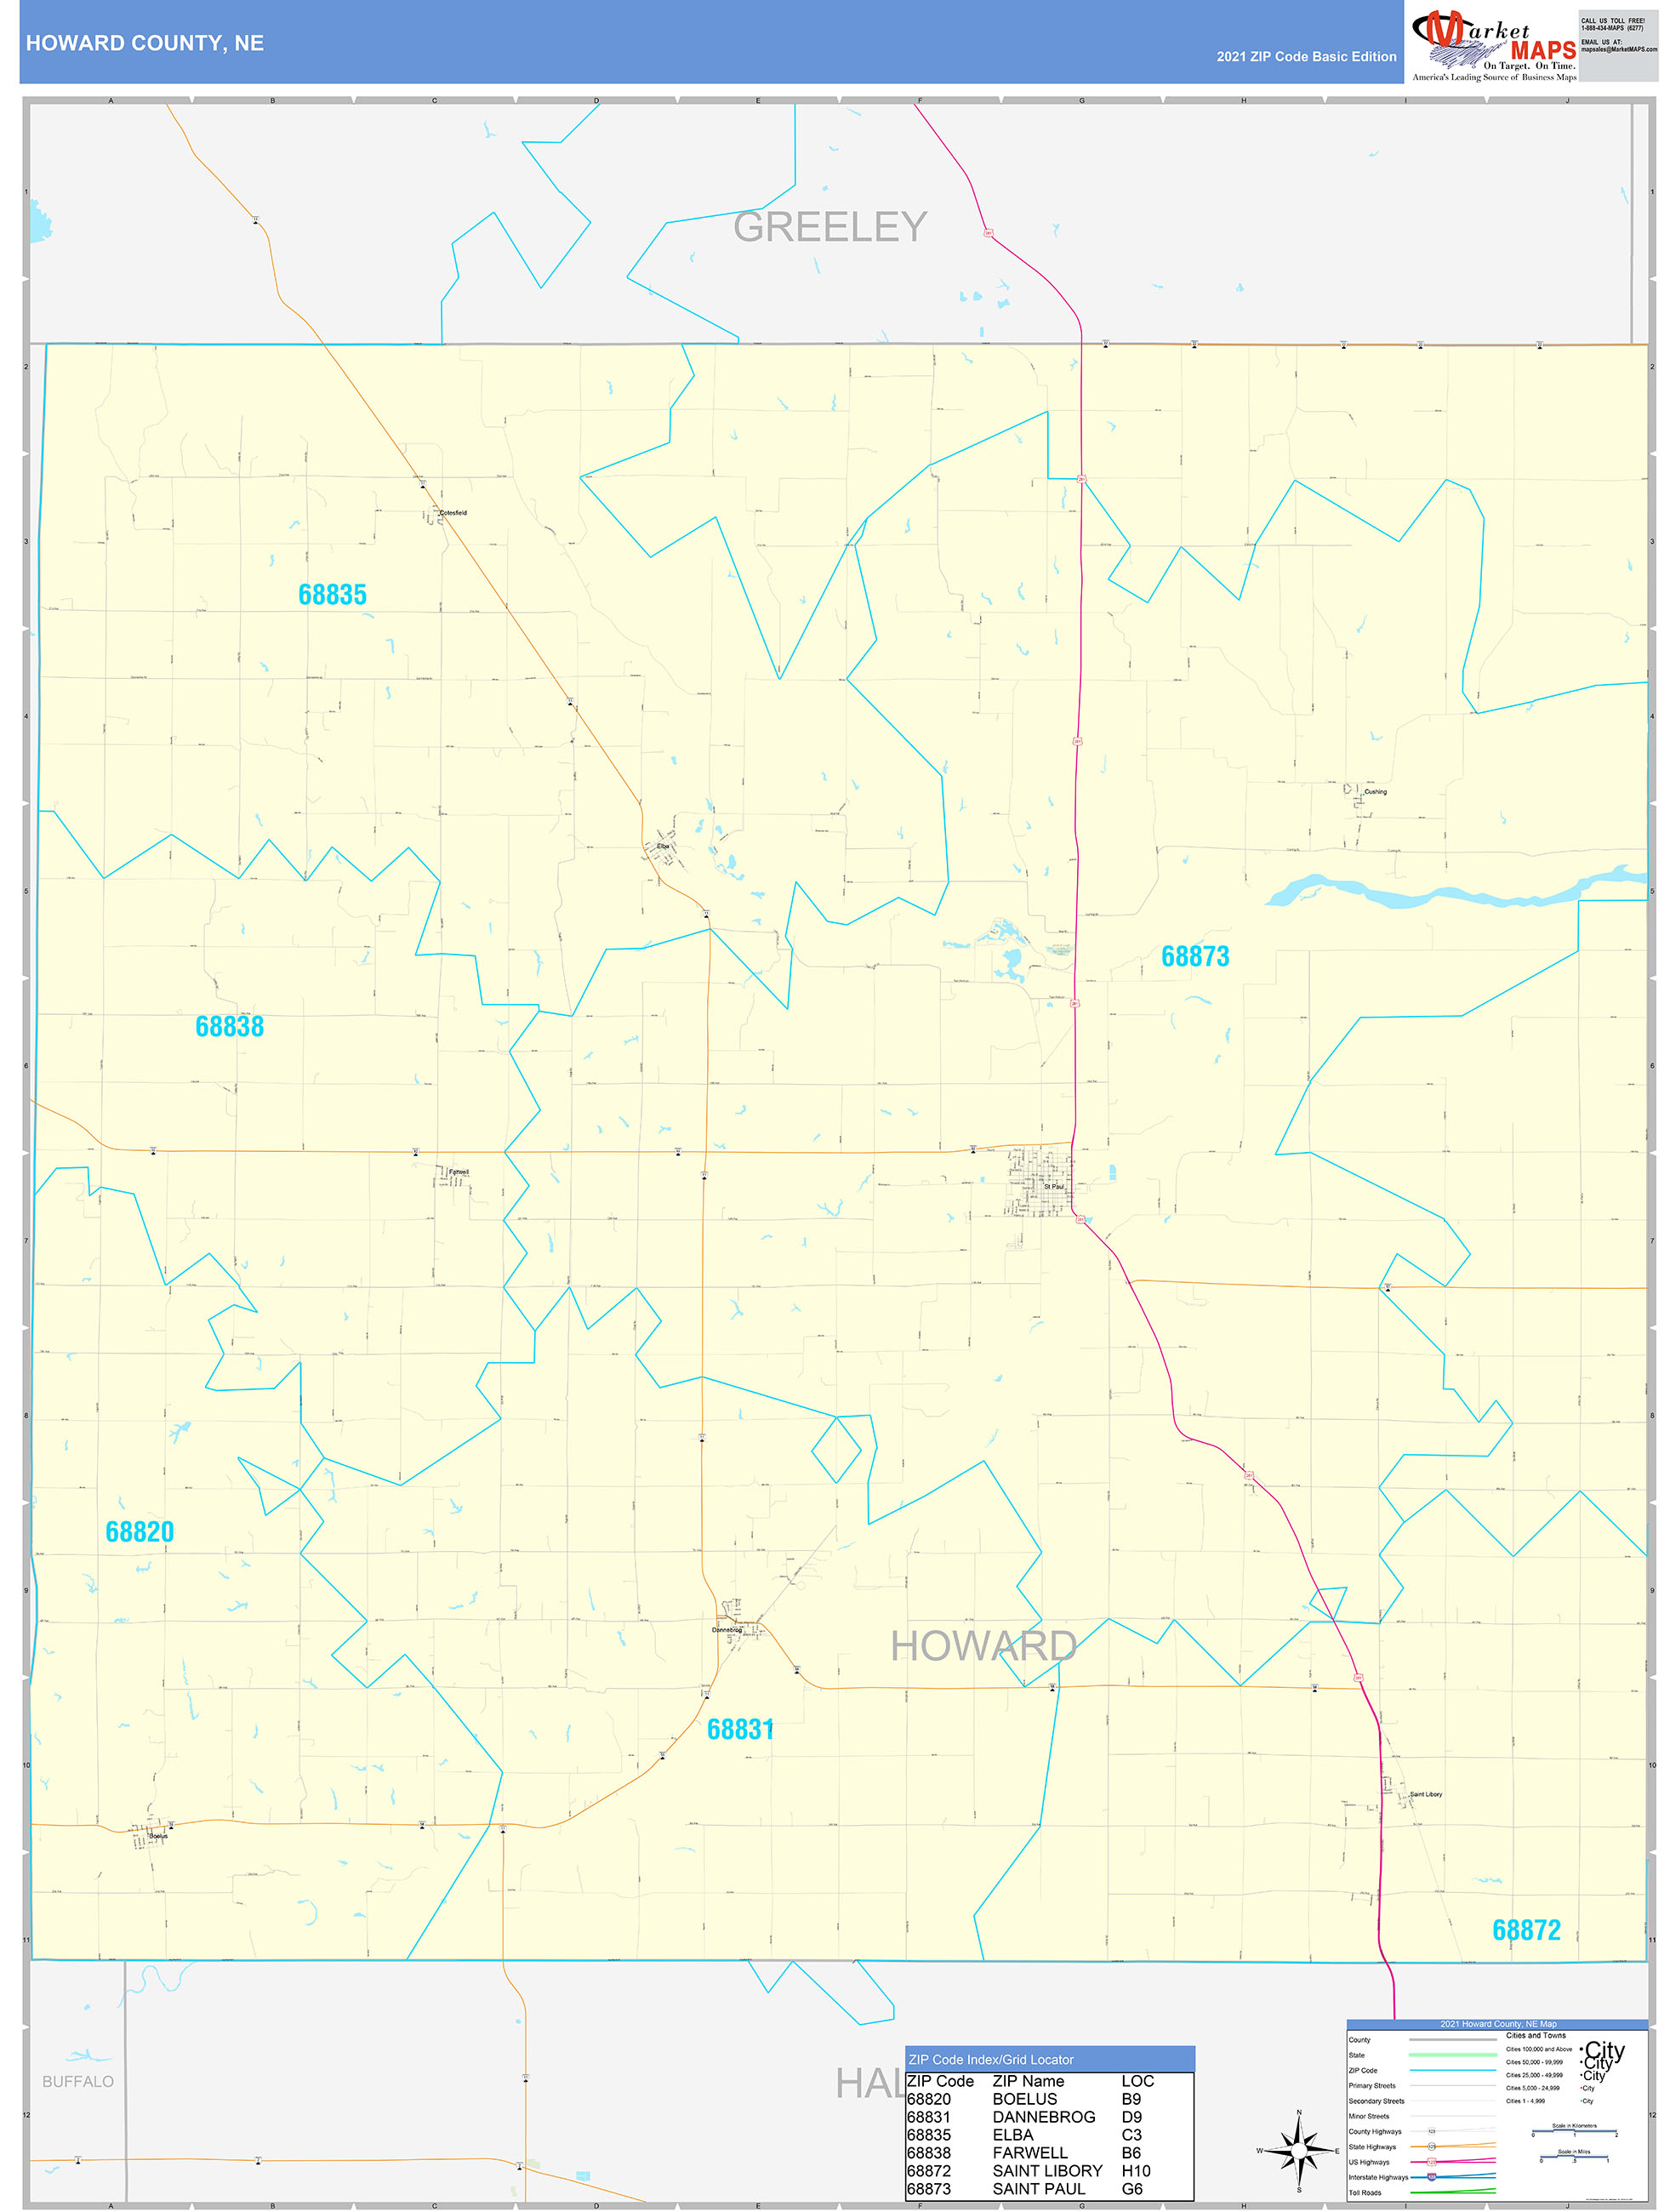 Howard County, NE Zip Code Wall Map Basic Style by MarketMAPS MapSales